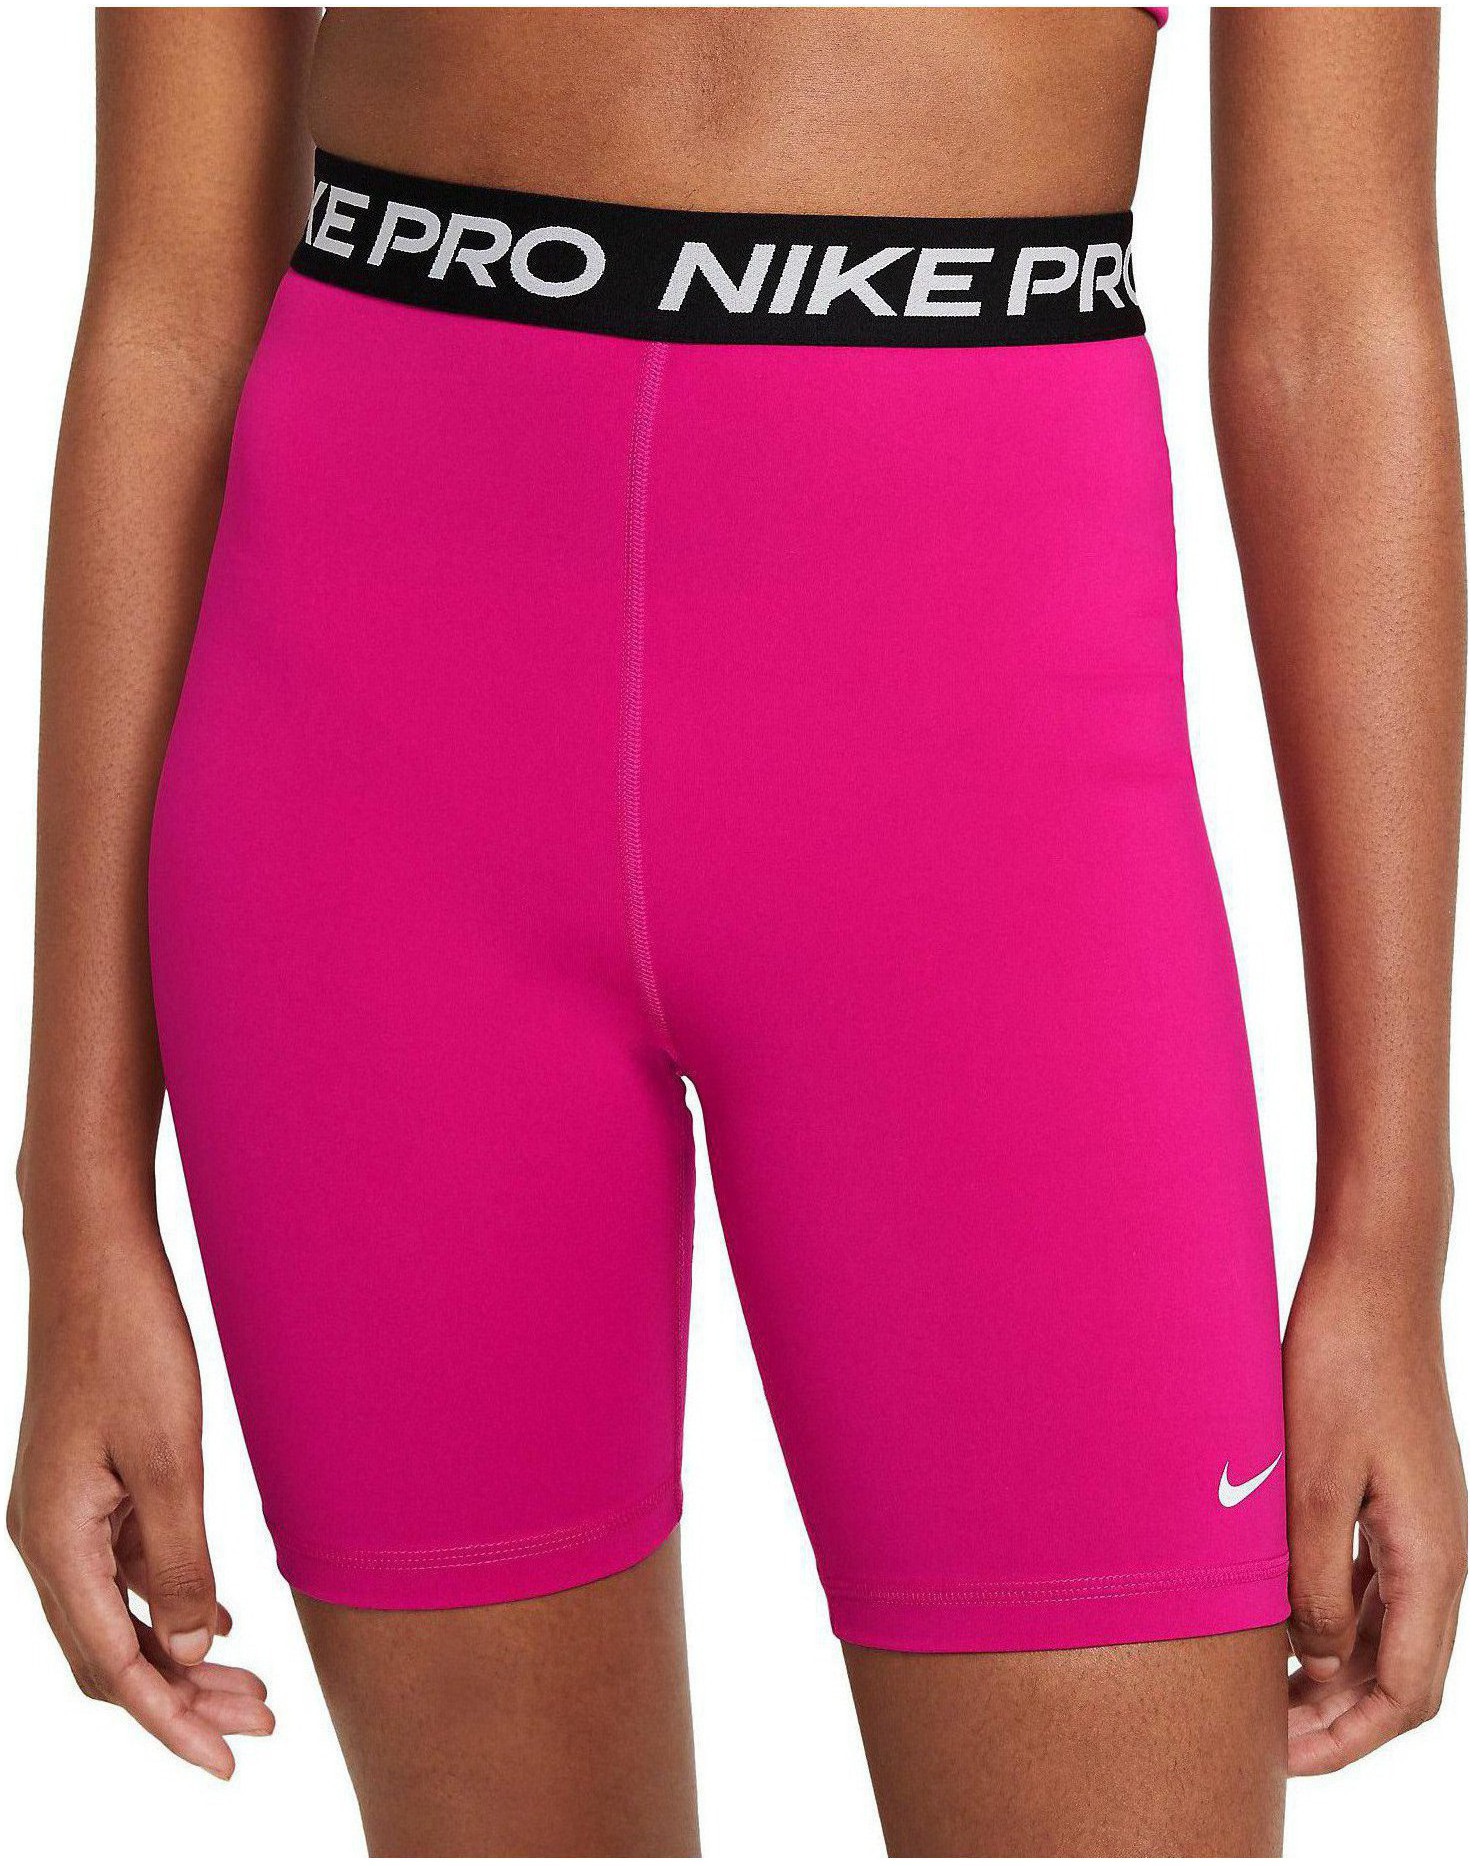 Велосипедки nike. Nike Pro w NP 365 shorts Black шорты. "Nike Pro 365 women's 13cm (approx.) Shorts" cz9831-100. Nike Pro велосипедки 18 +. Шорты Nike Pro 365.